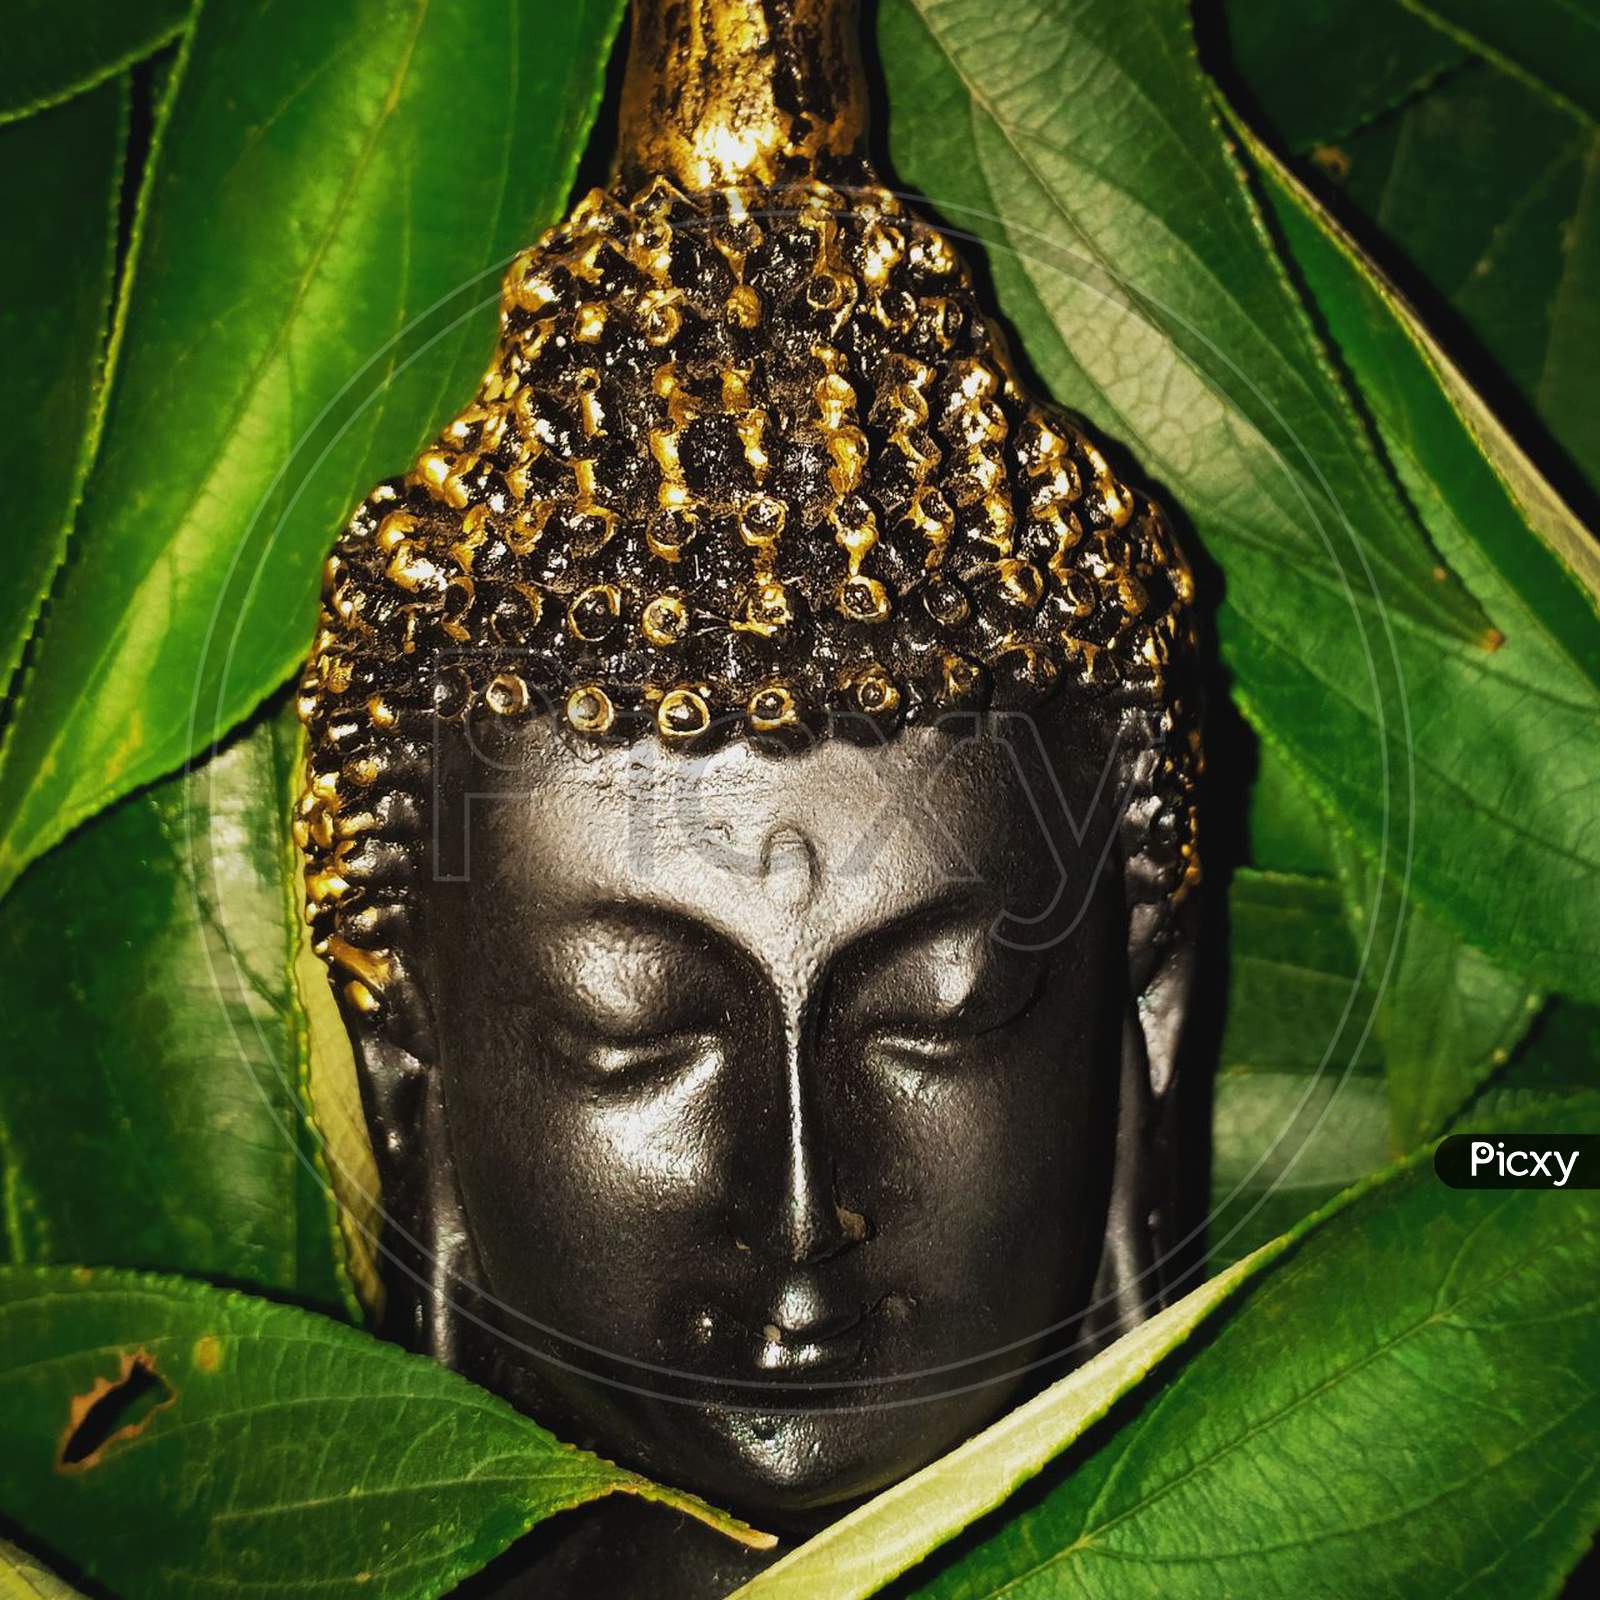 Buddha in meditation amidst nature